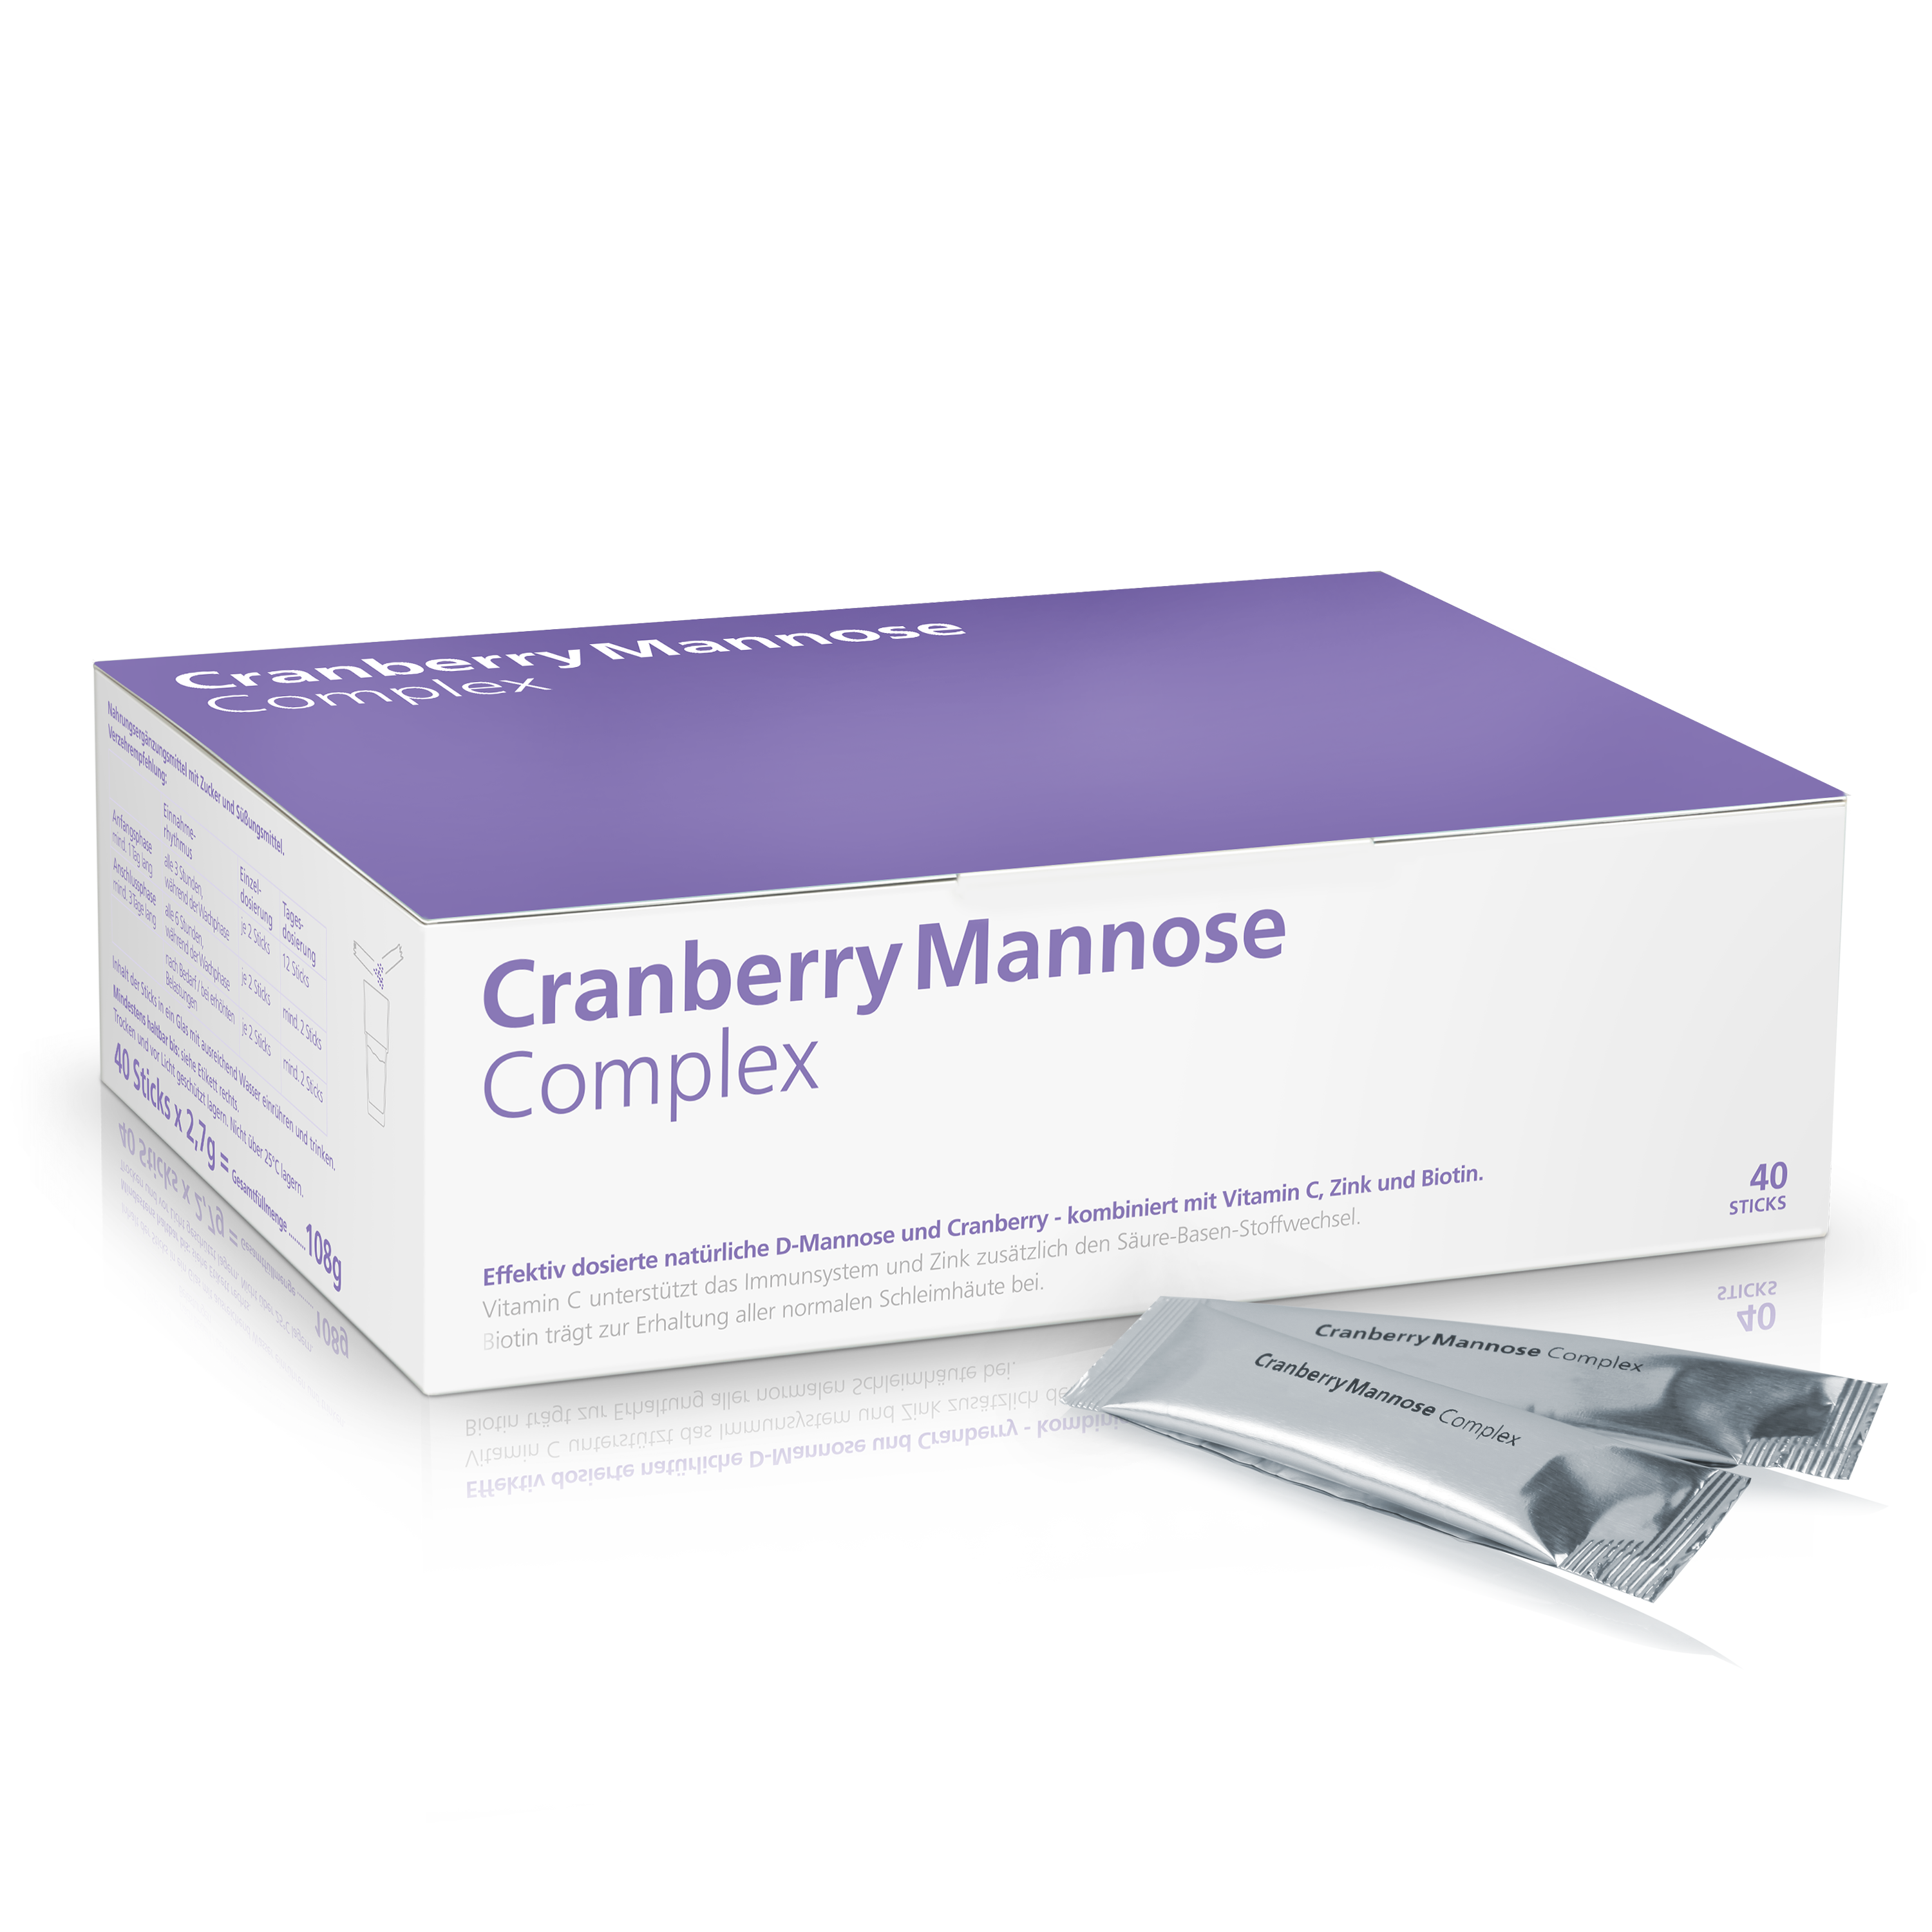 Cranberry Mannose Complex